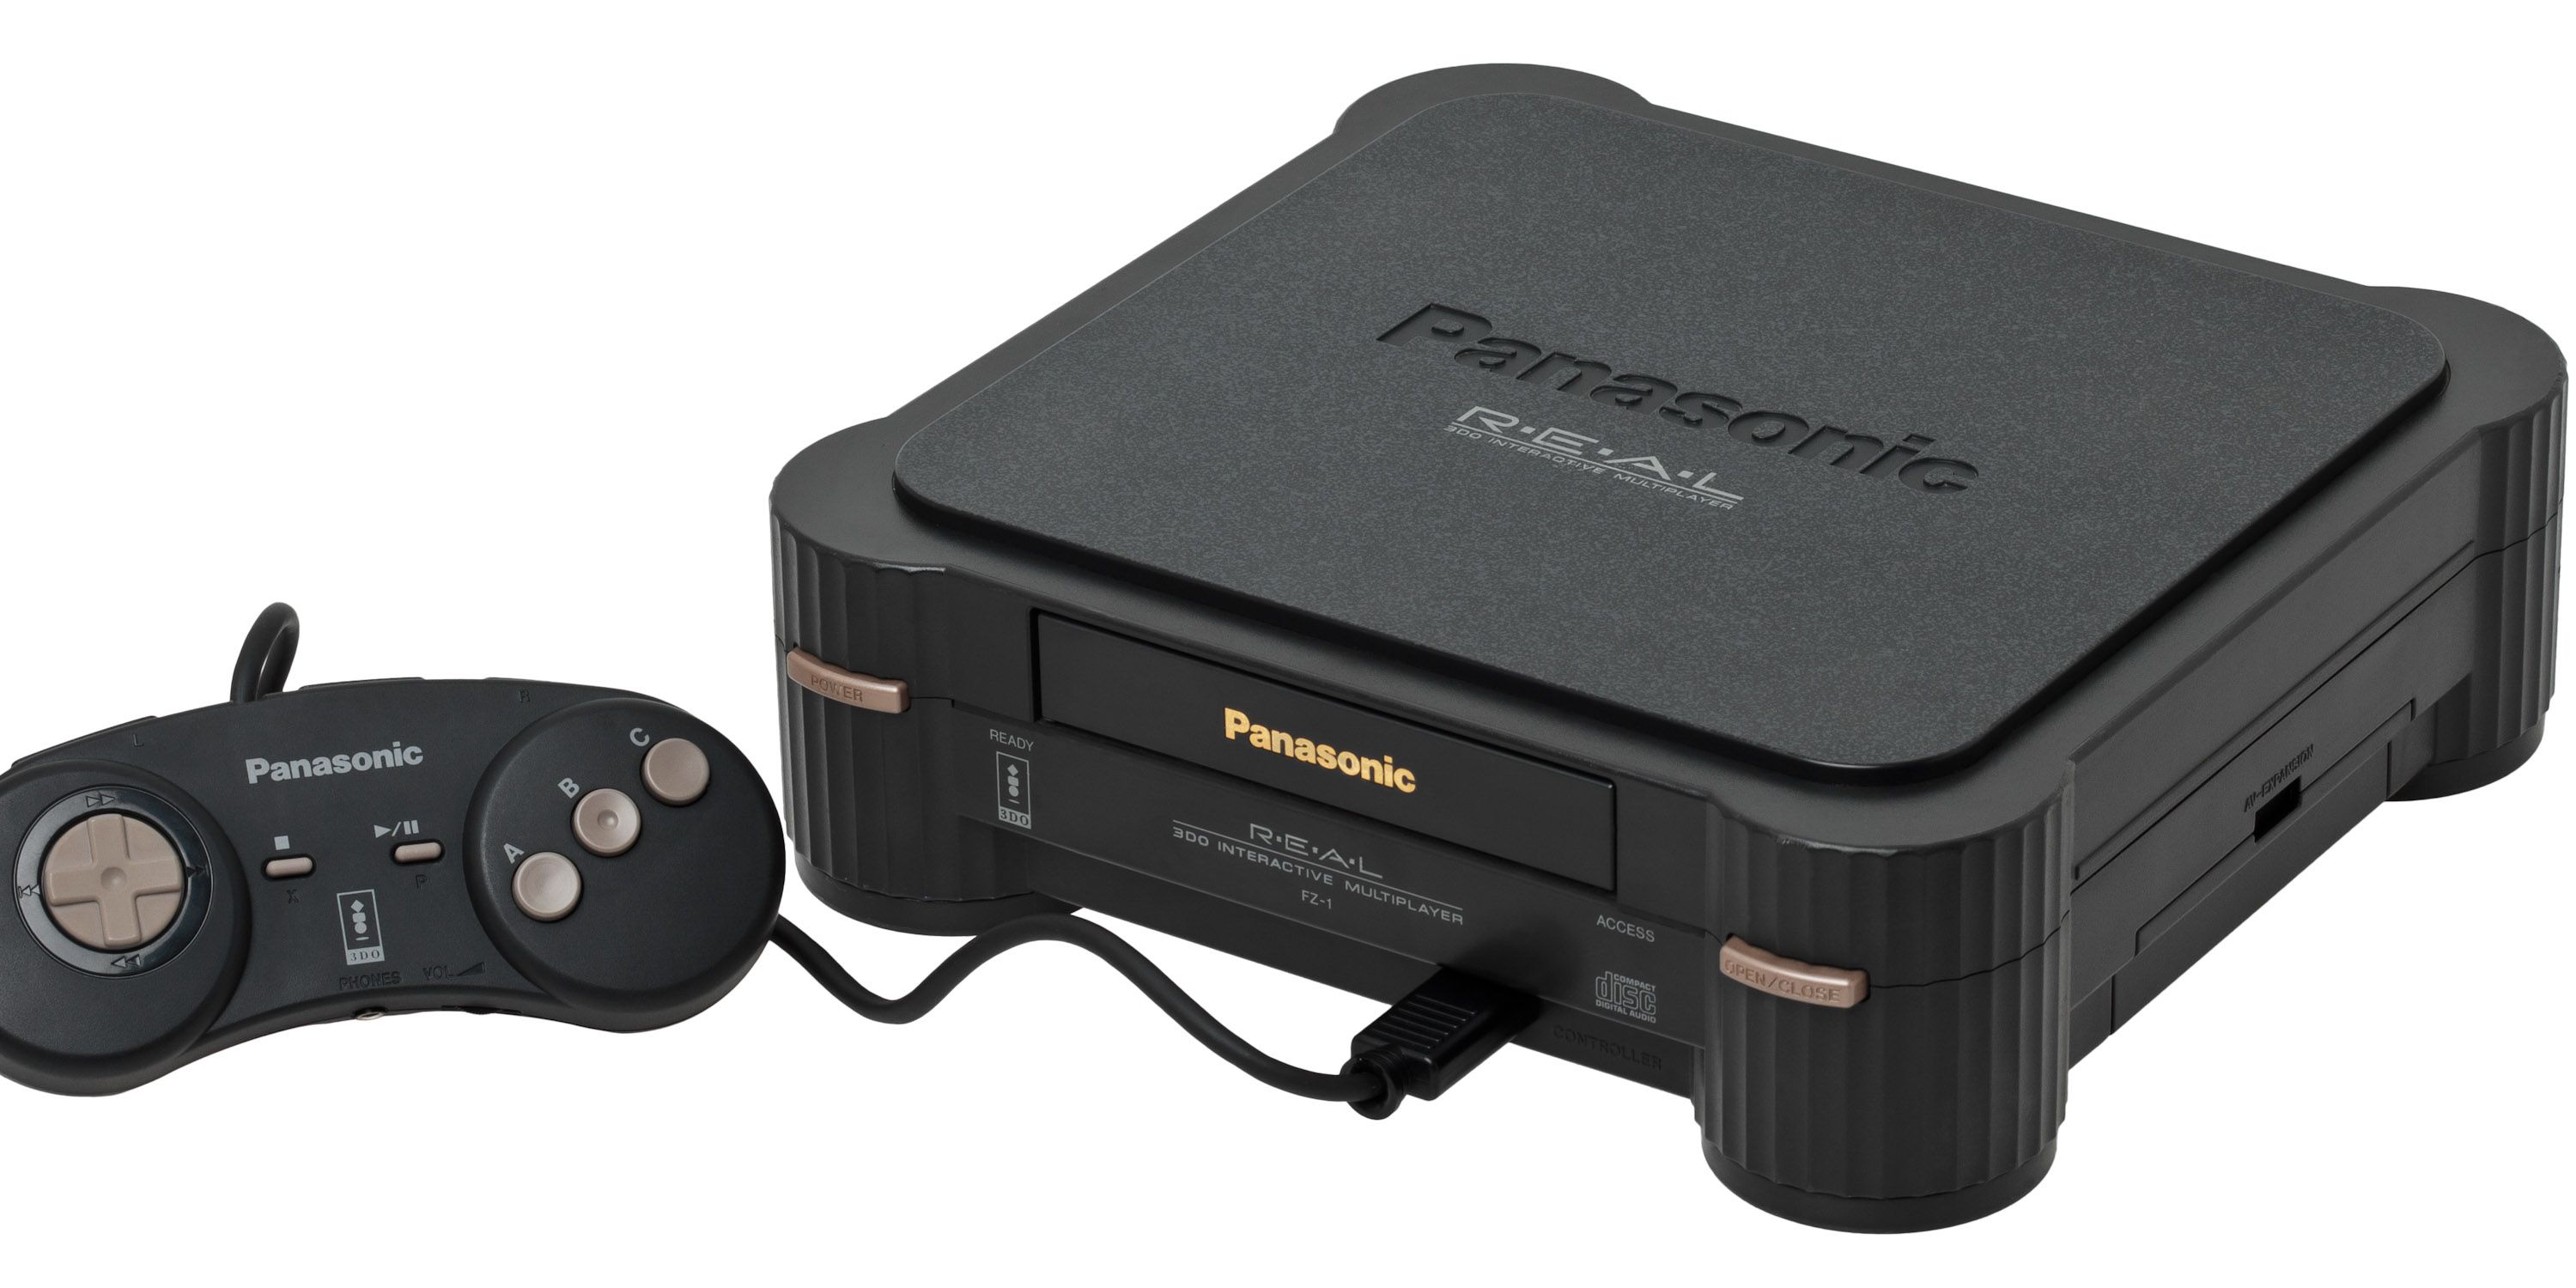 Panasonic 3DO console